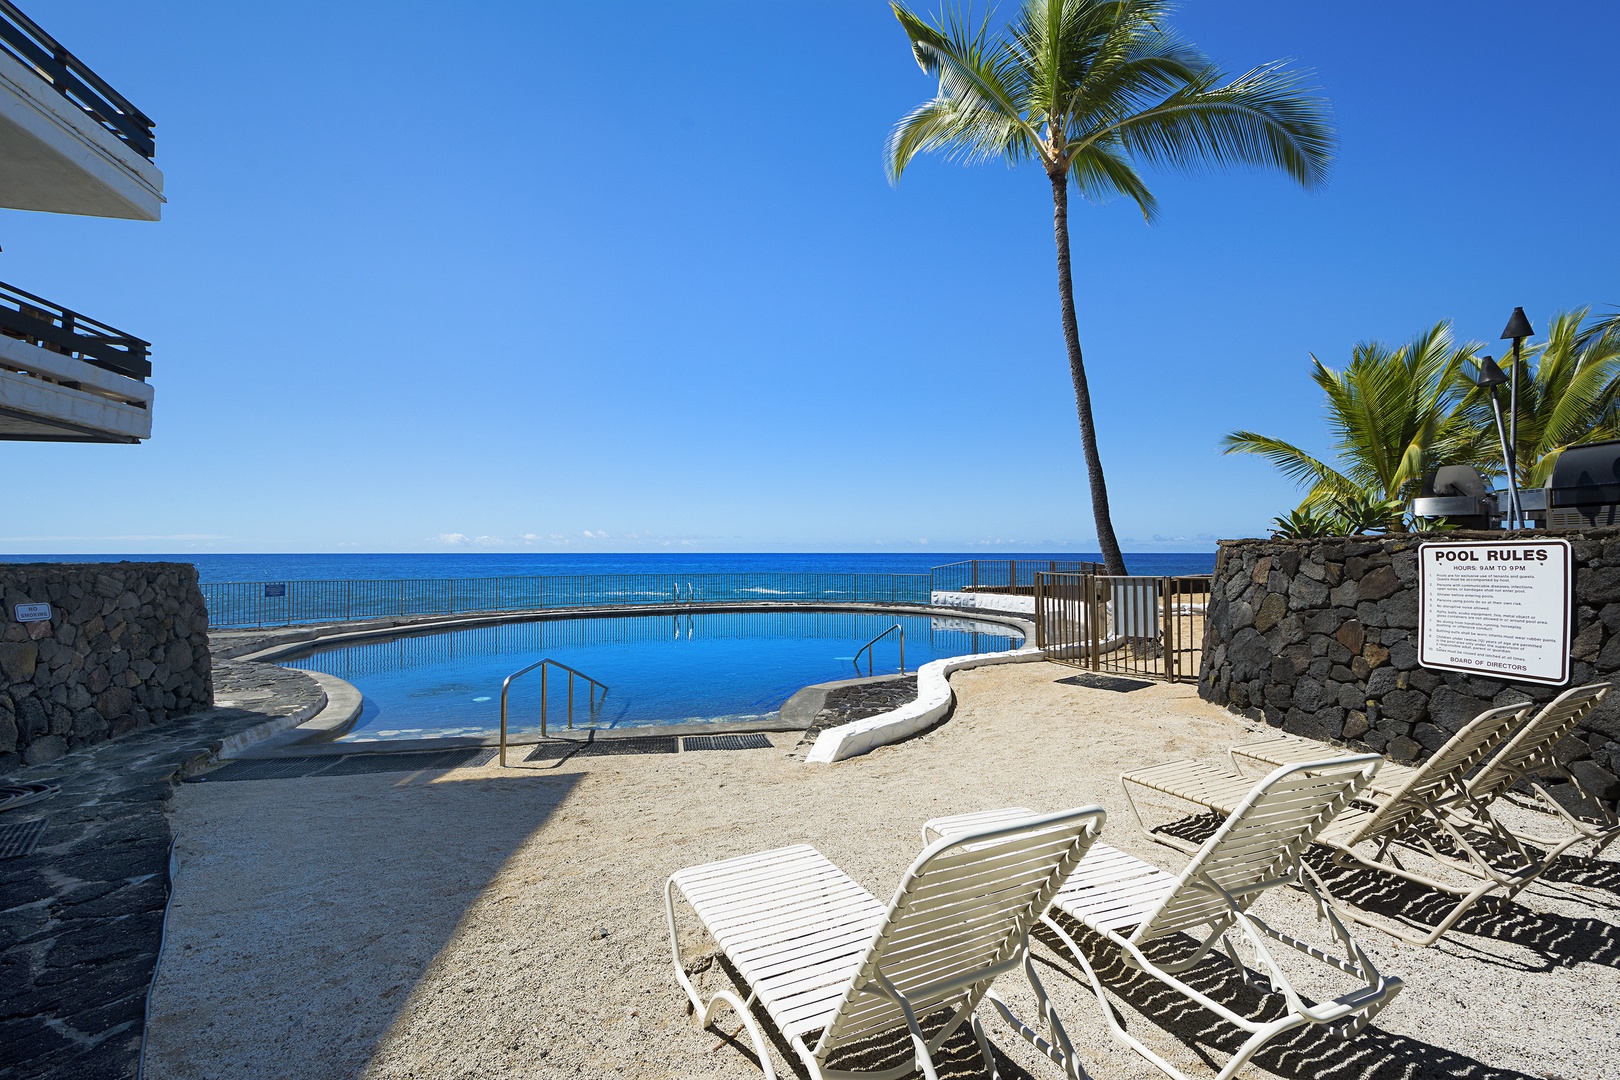 Kailua Kona Vacation Rentals, Casa De Emdeko 222 - Relax and melt the stress away in this fantastic scenario